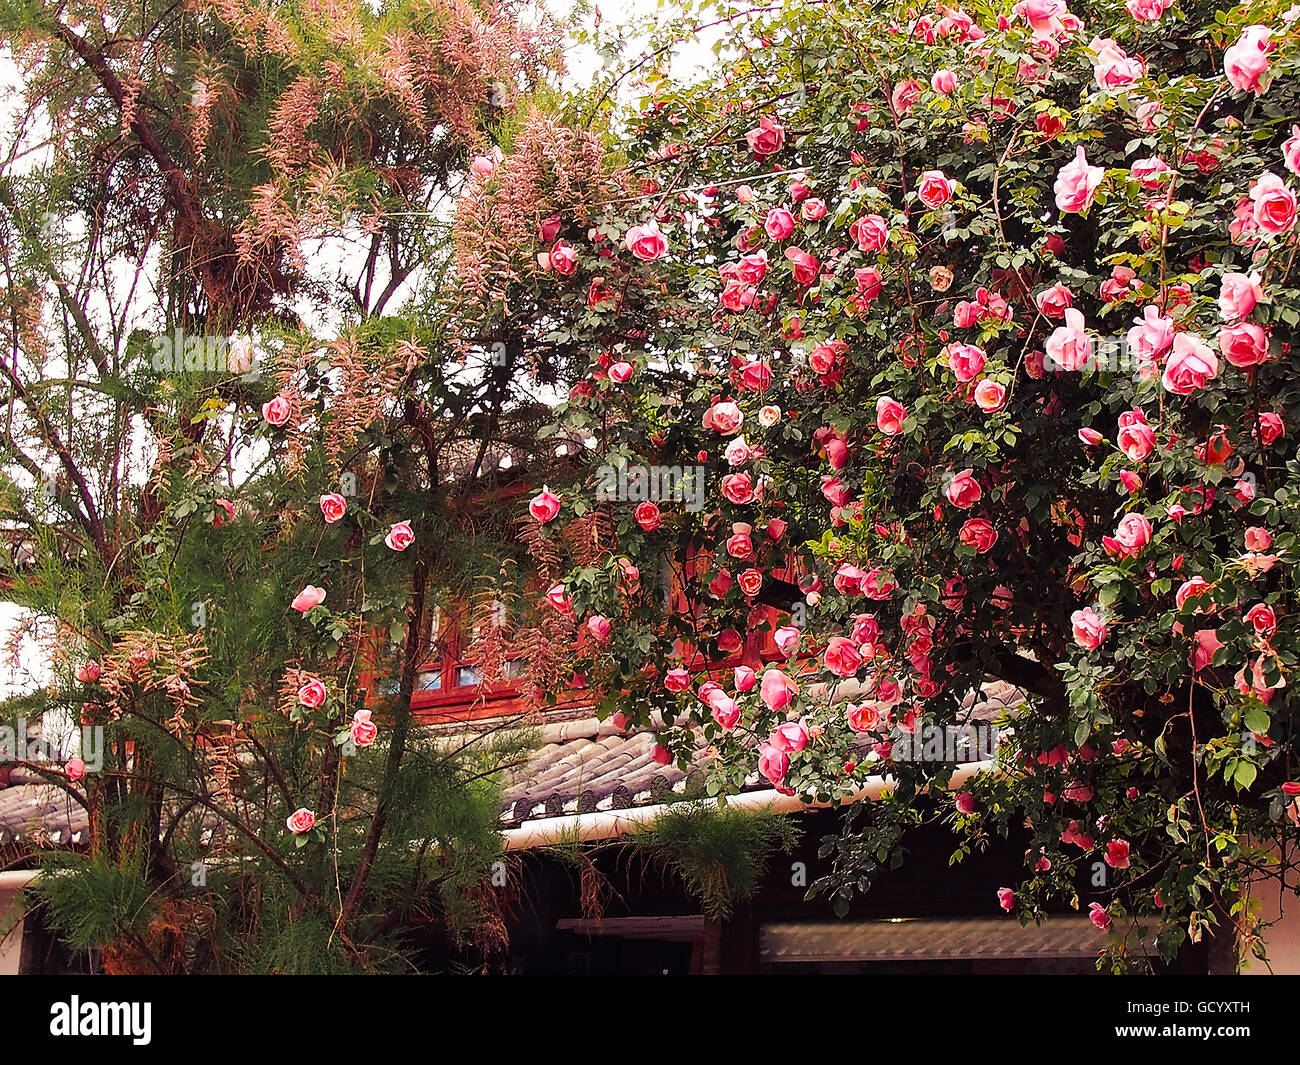 Australian Glory Flower bush - Stock Image Stock Photo